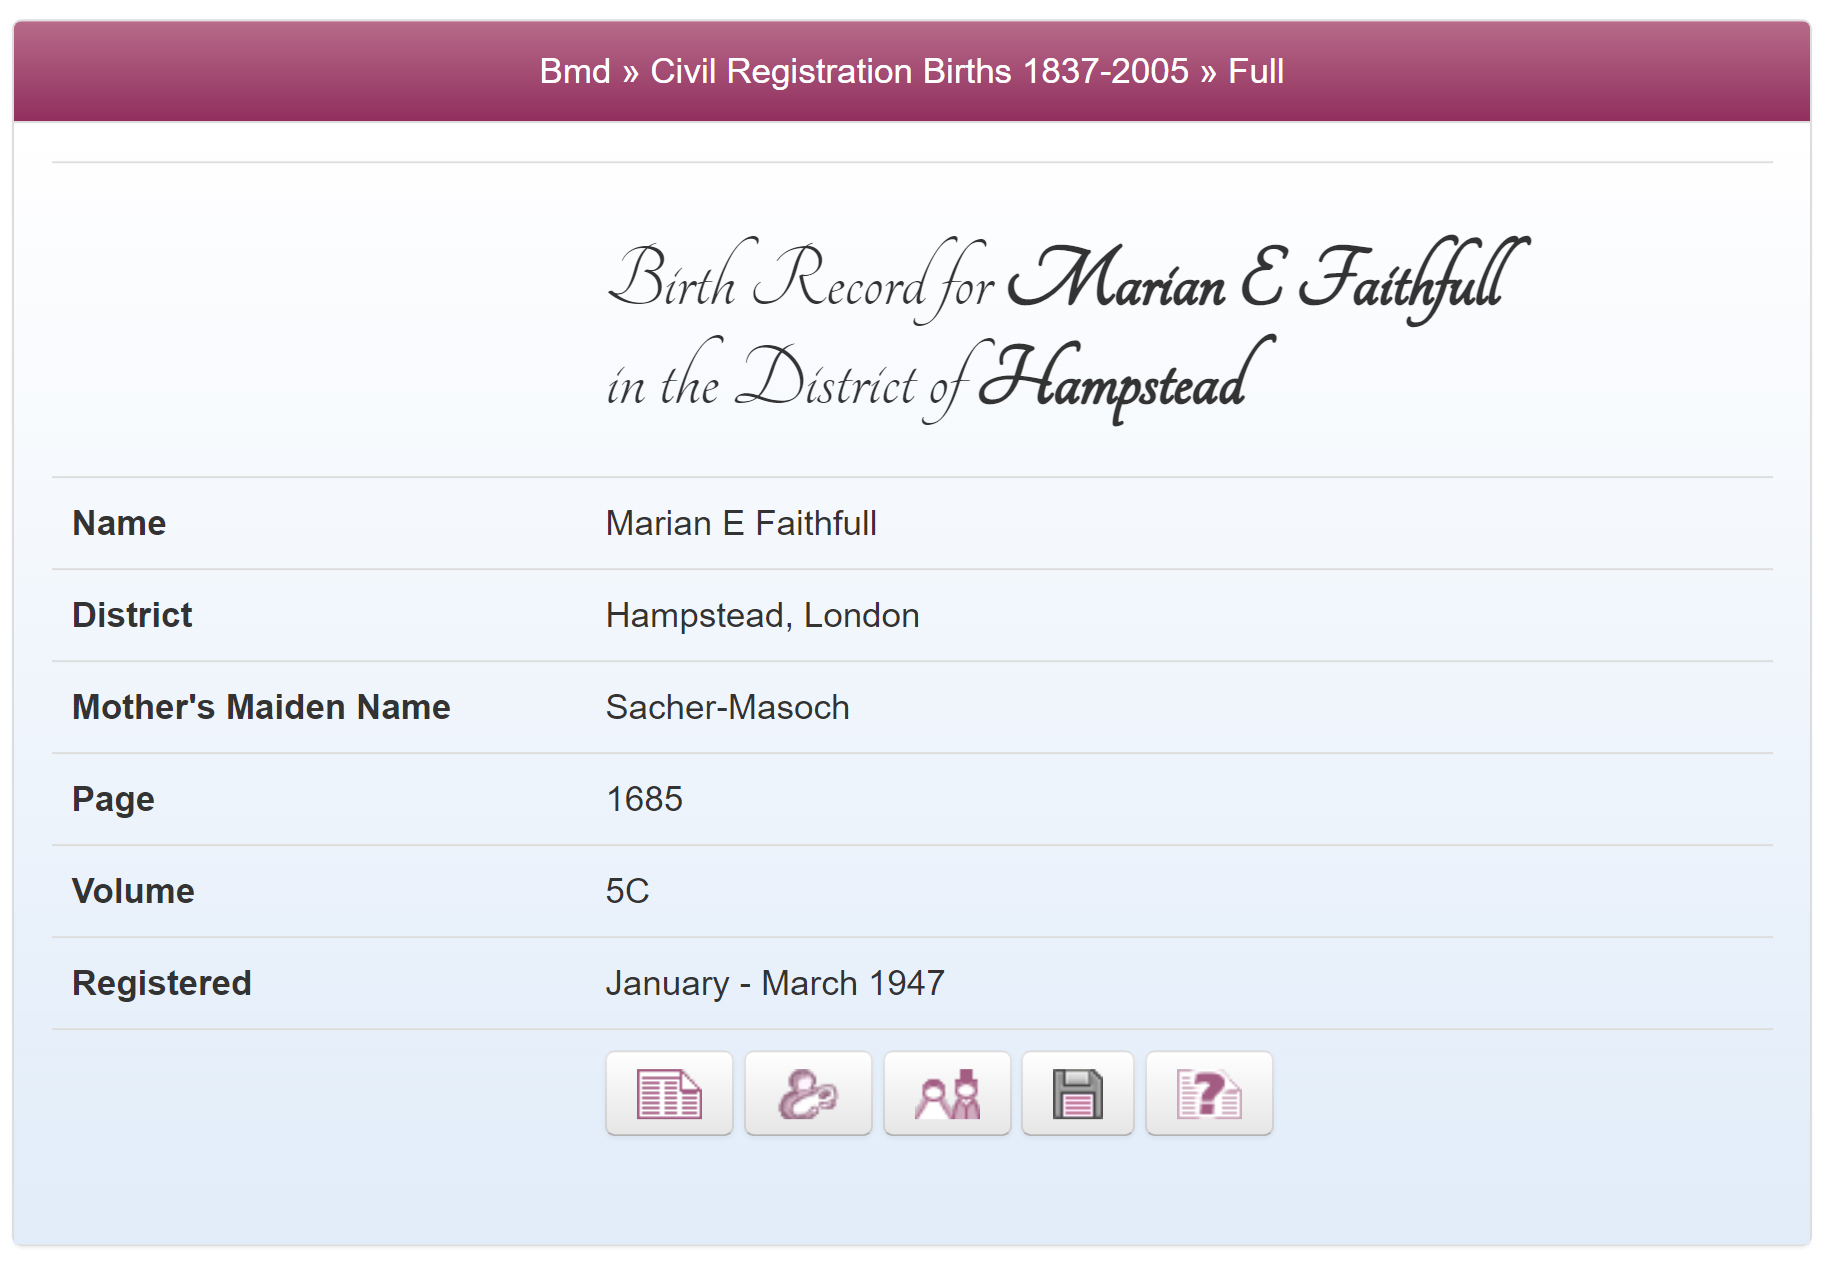 Birth Record for Marianne Faithfull